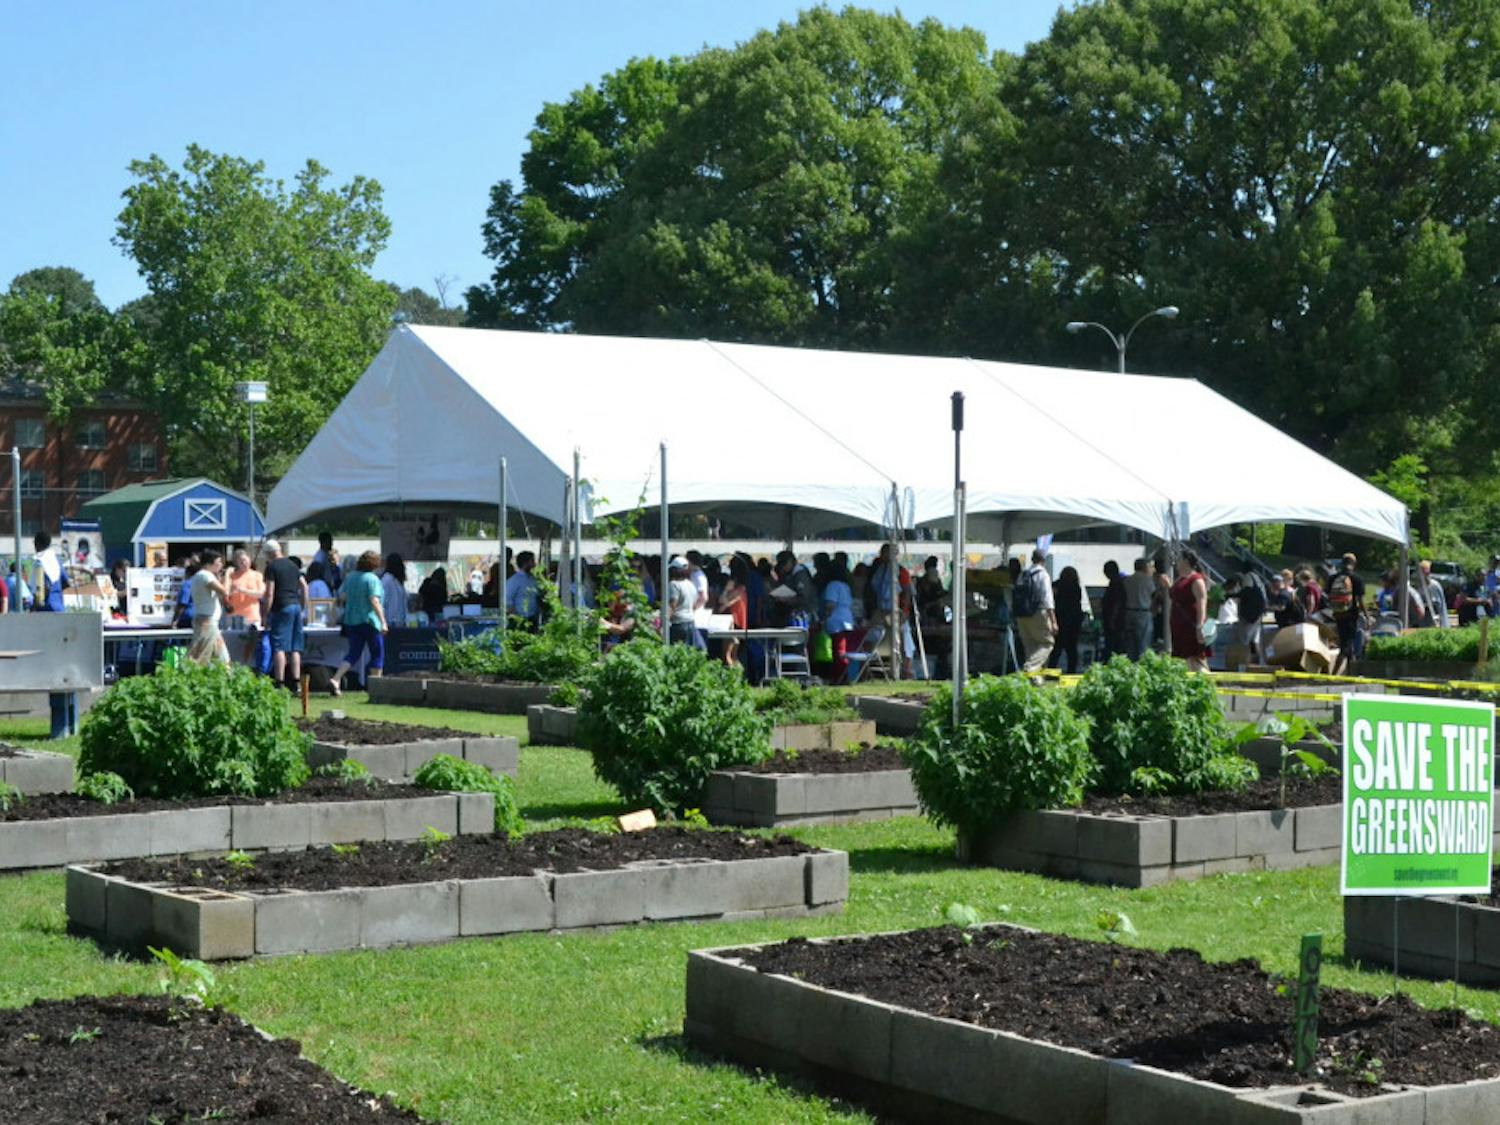 Campus garden hosts Earth Day celebration